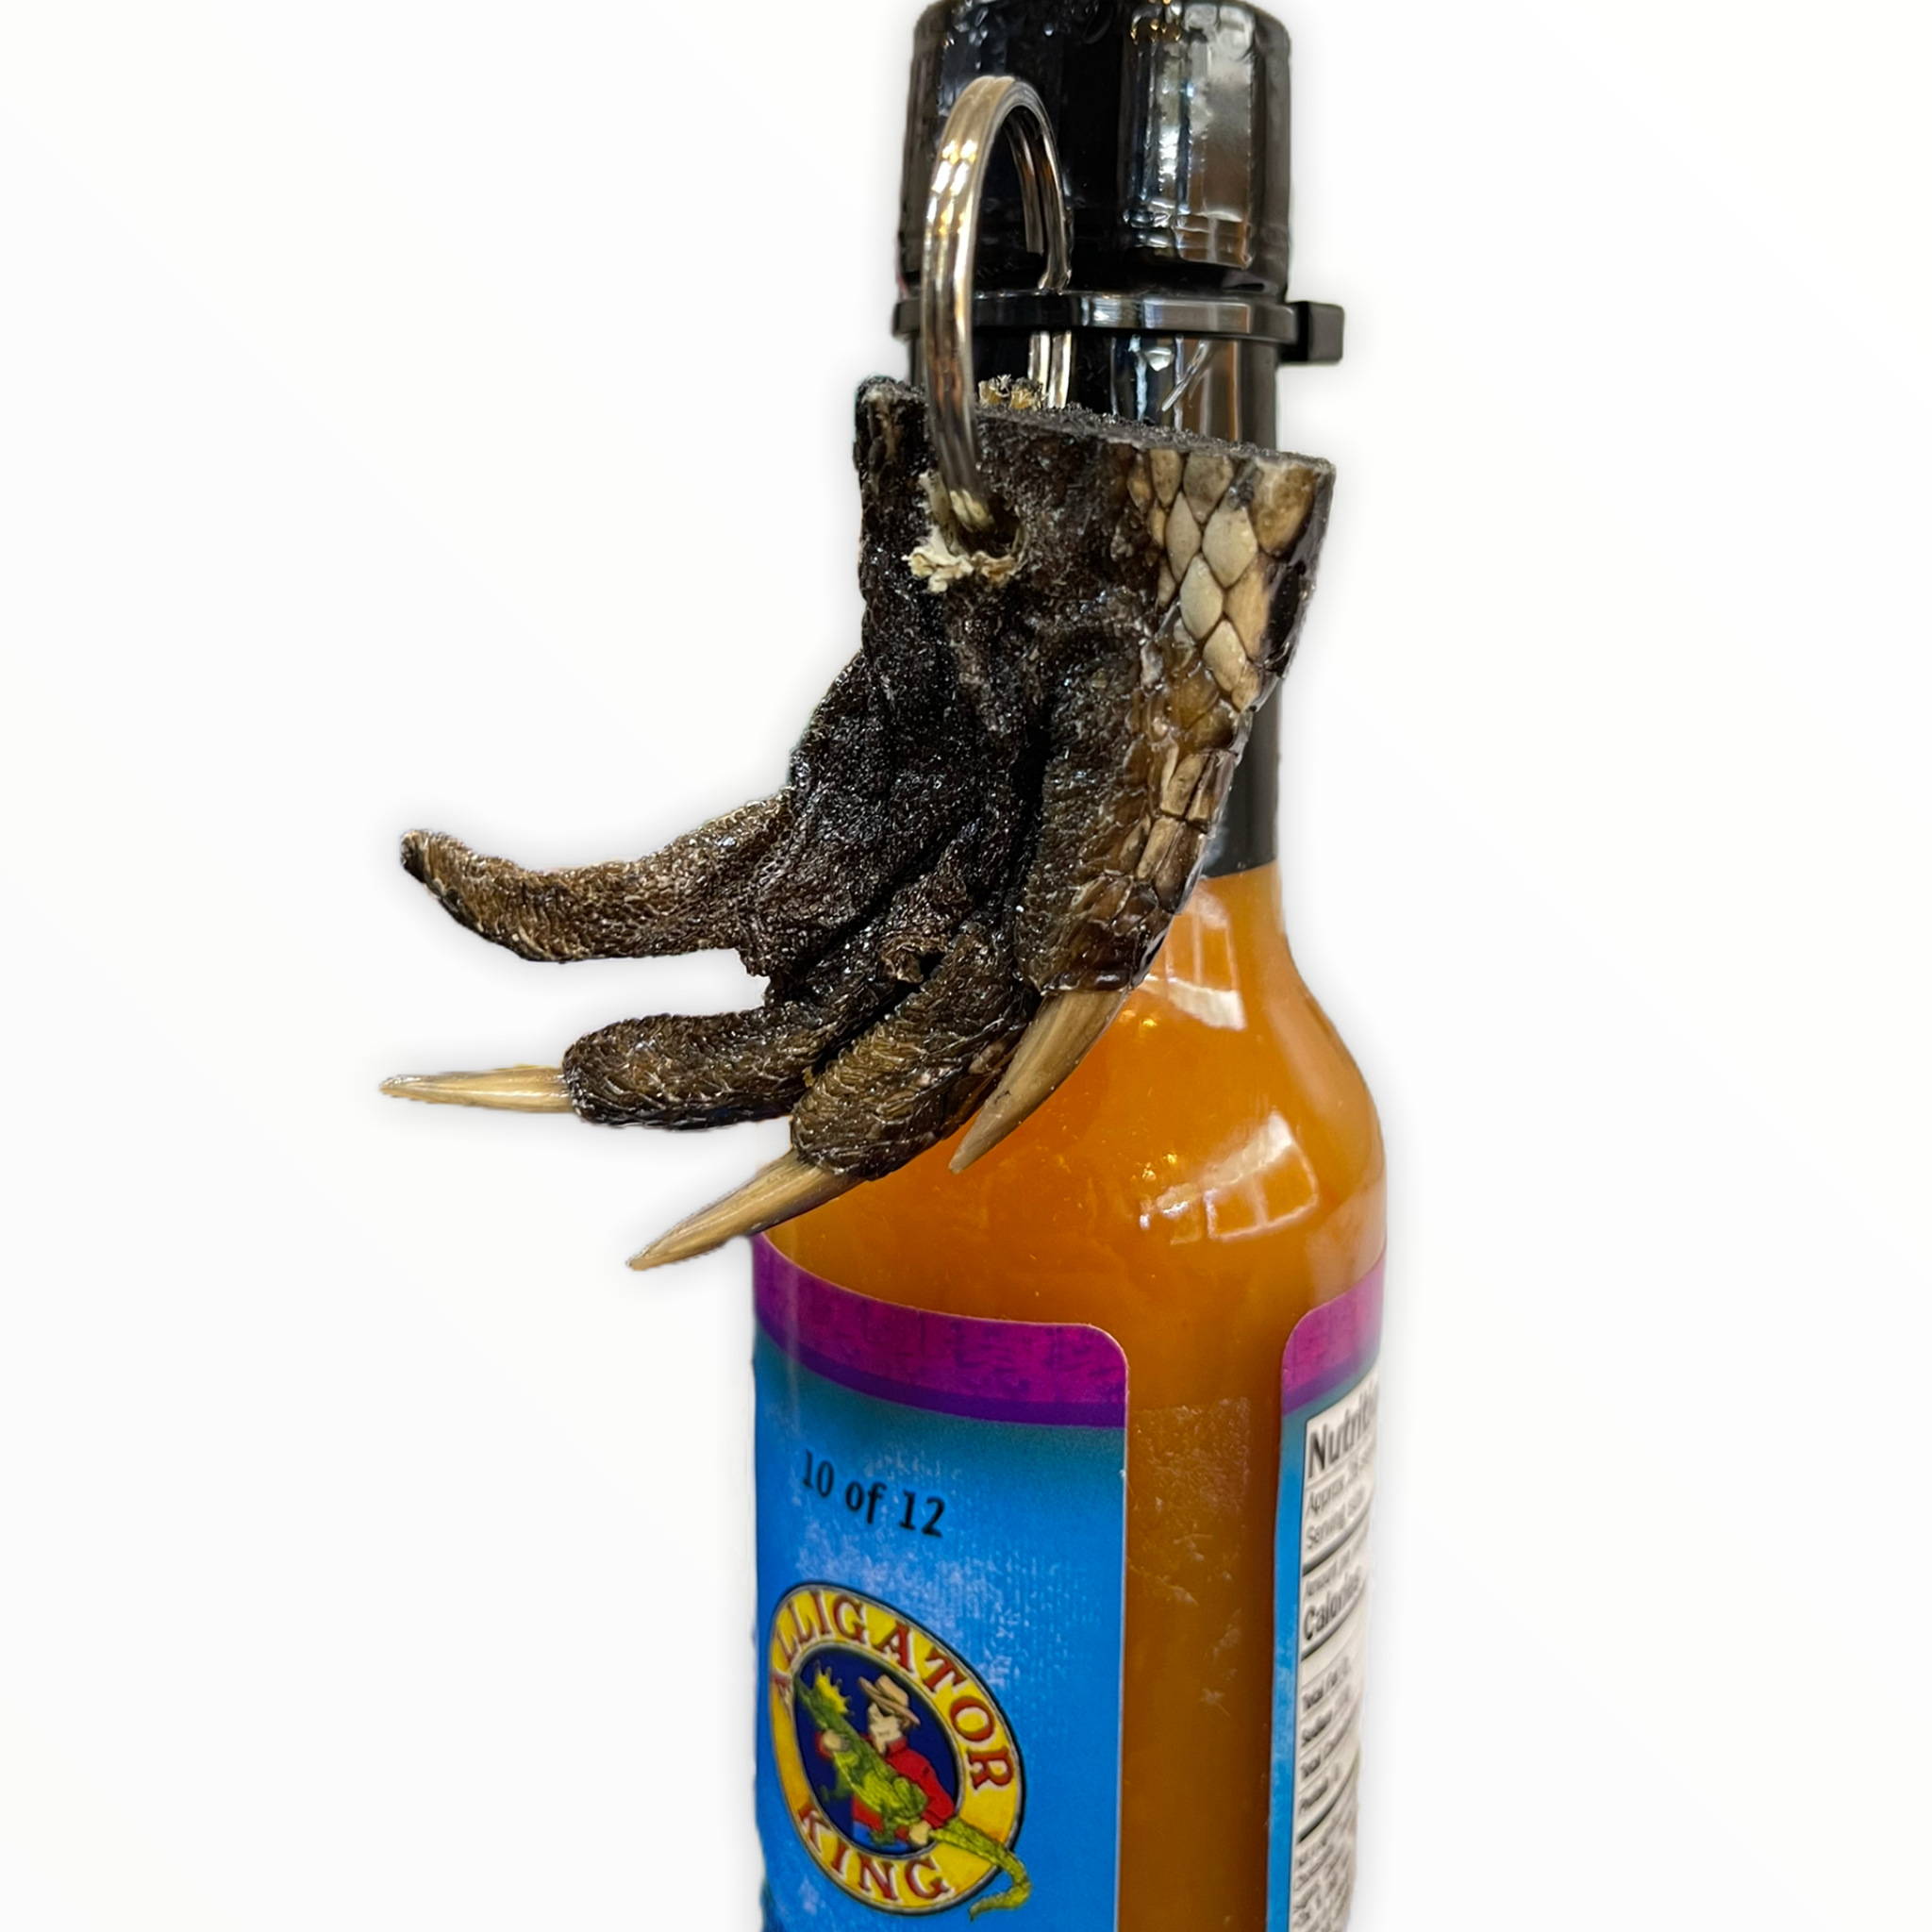 Tropigator Mango Habanero Hot Sauce with Gator Claw